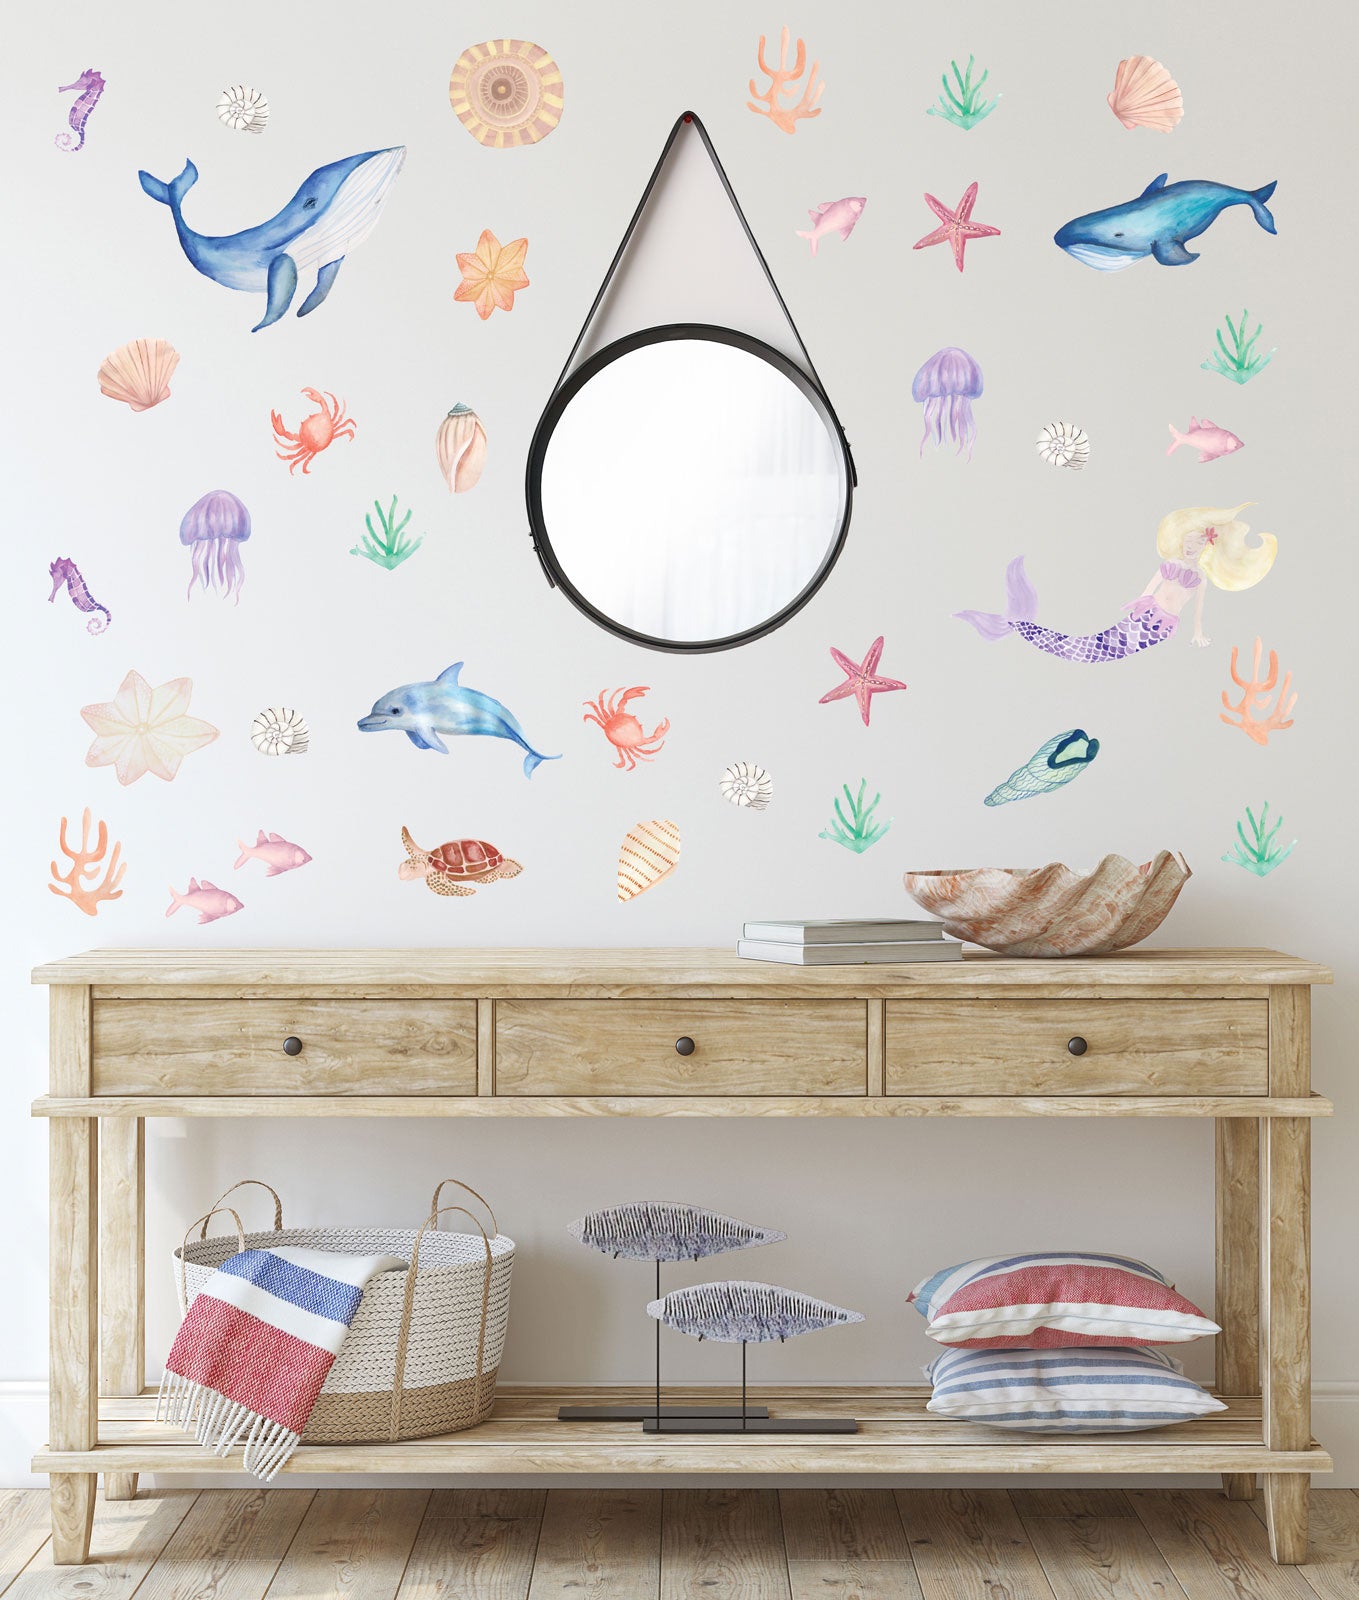 Sea Animals, Mermaid and Shells, Under the Sea, Fabric Wall Stickers - A Creative Hart